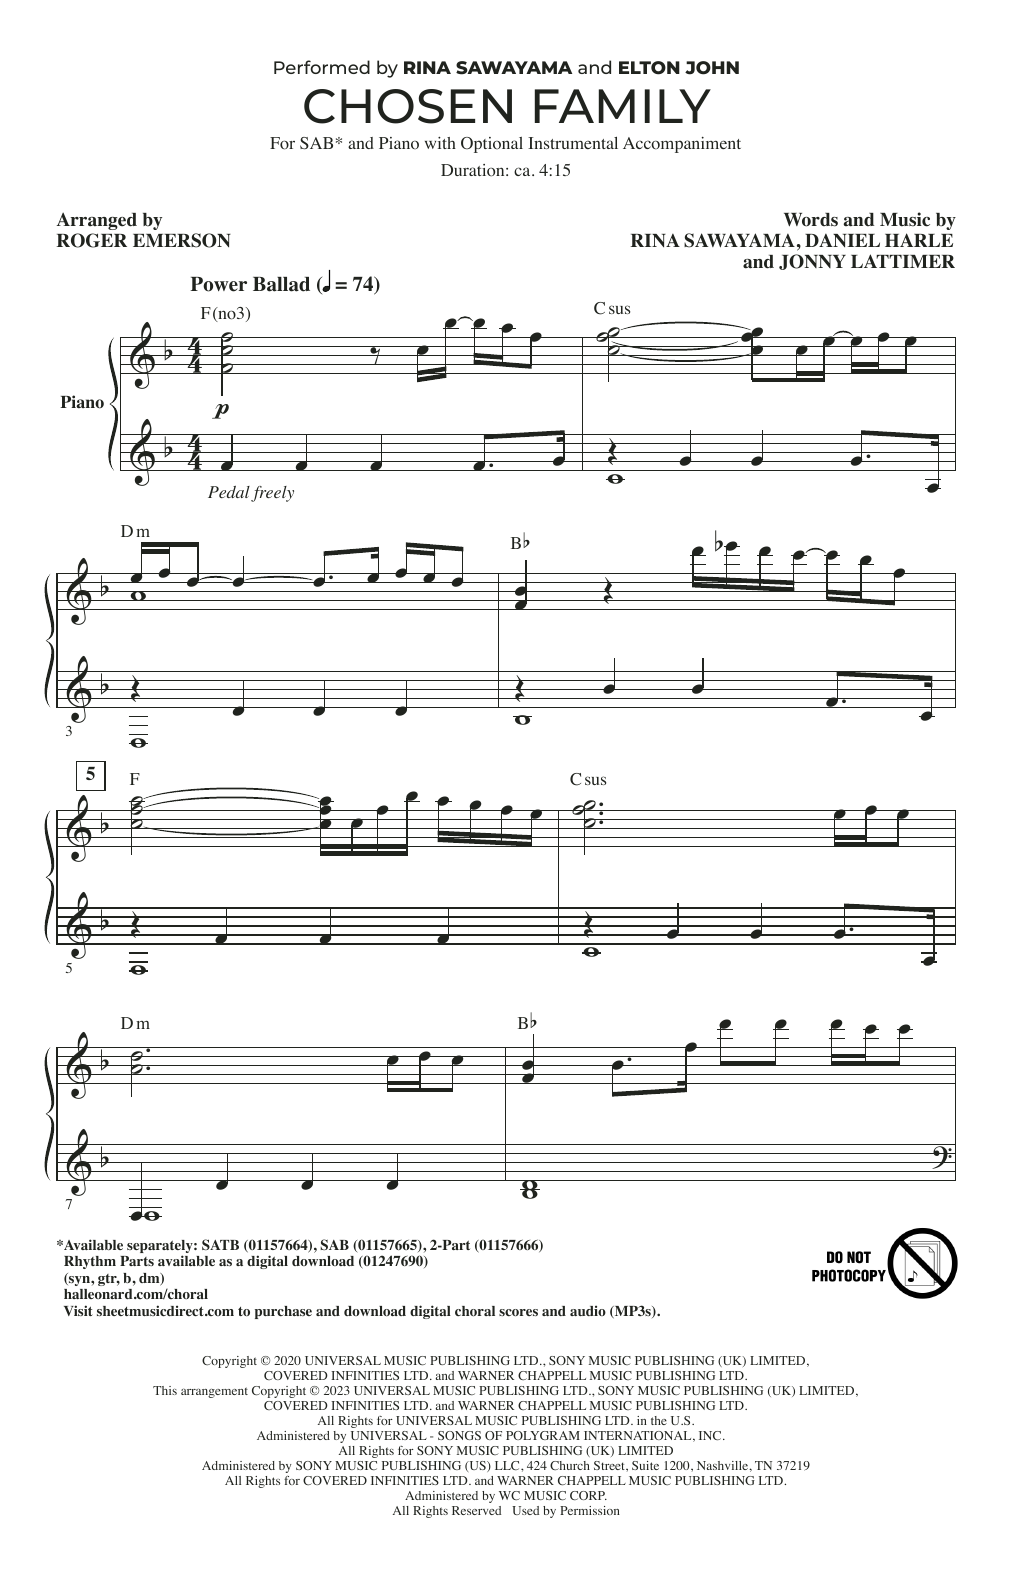 Rina Sawayama and Elton John Chosen Family (arr. Roger Emerson) Sheet Music Notes & Chords for 2-Part Choir - Download or Print PDF